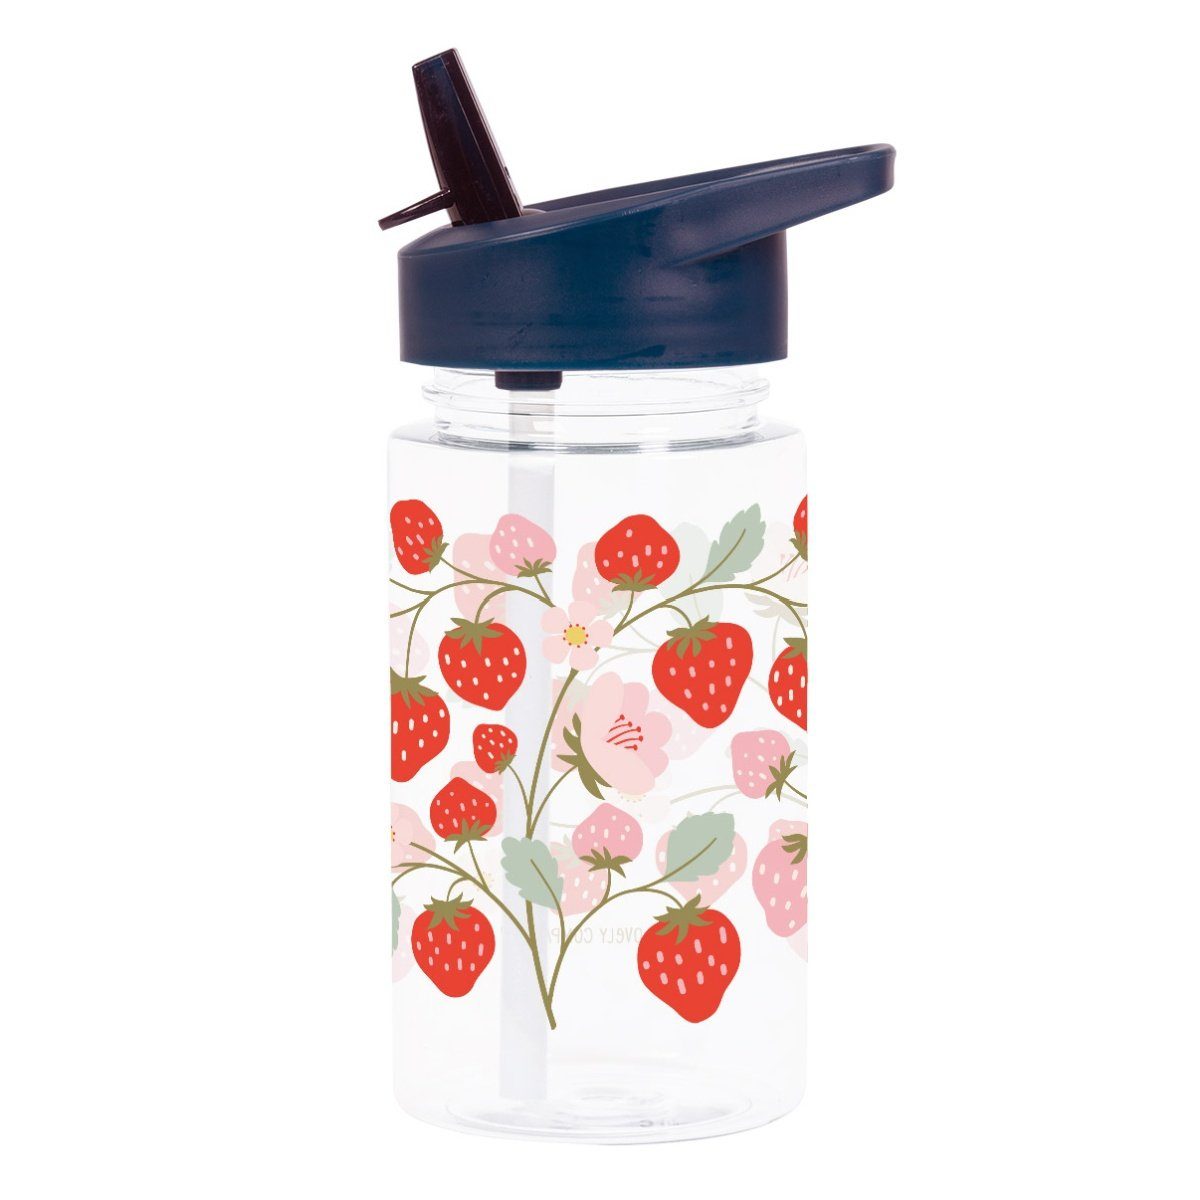 A little lovely Kinderflasche Wasserflasche Trinkhalm Trinkflasche mit Company Trinkflasche 450ml Erdbeere